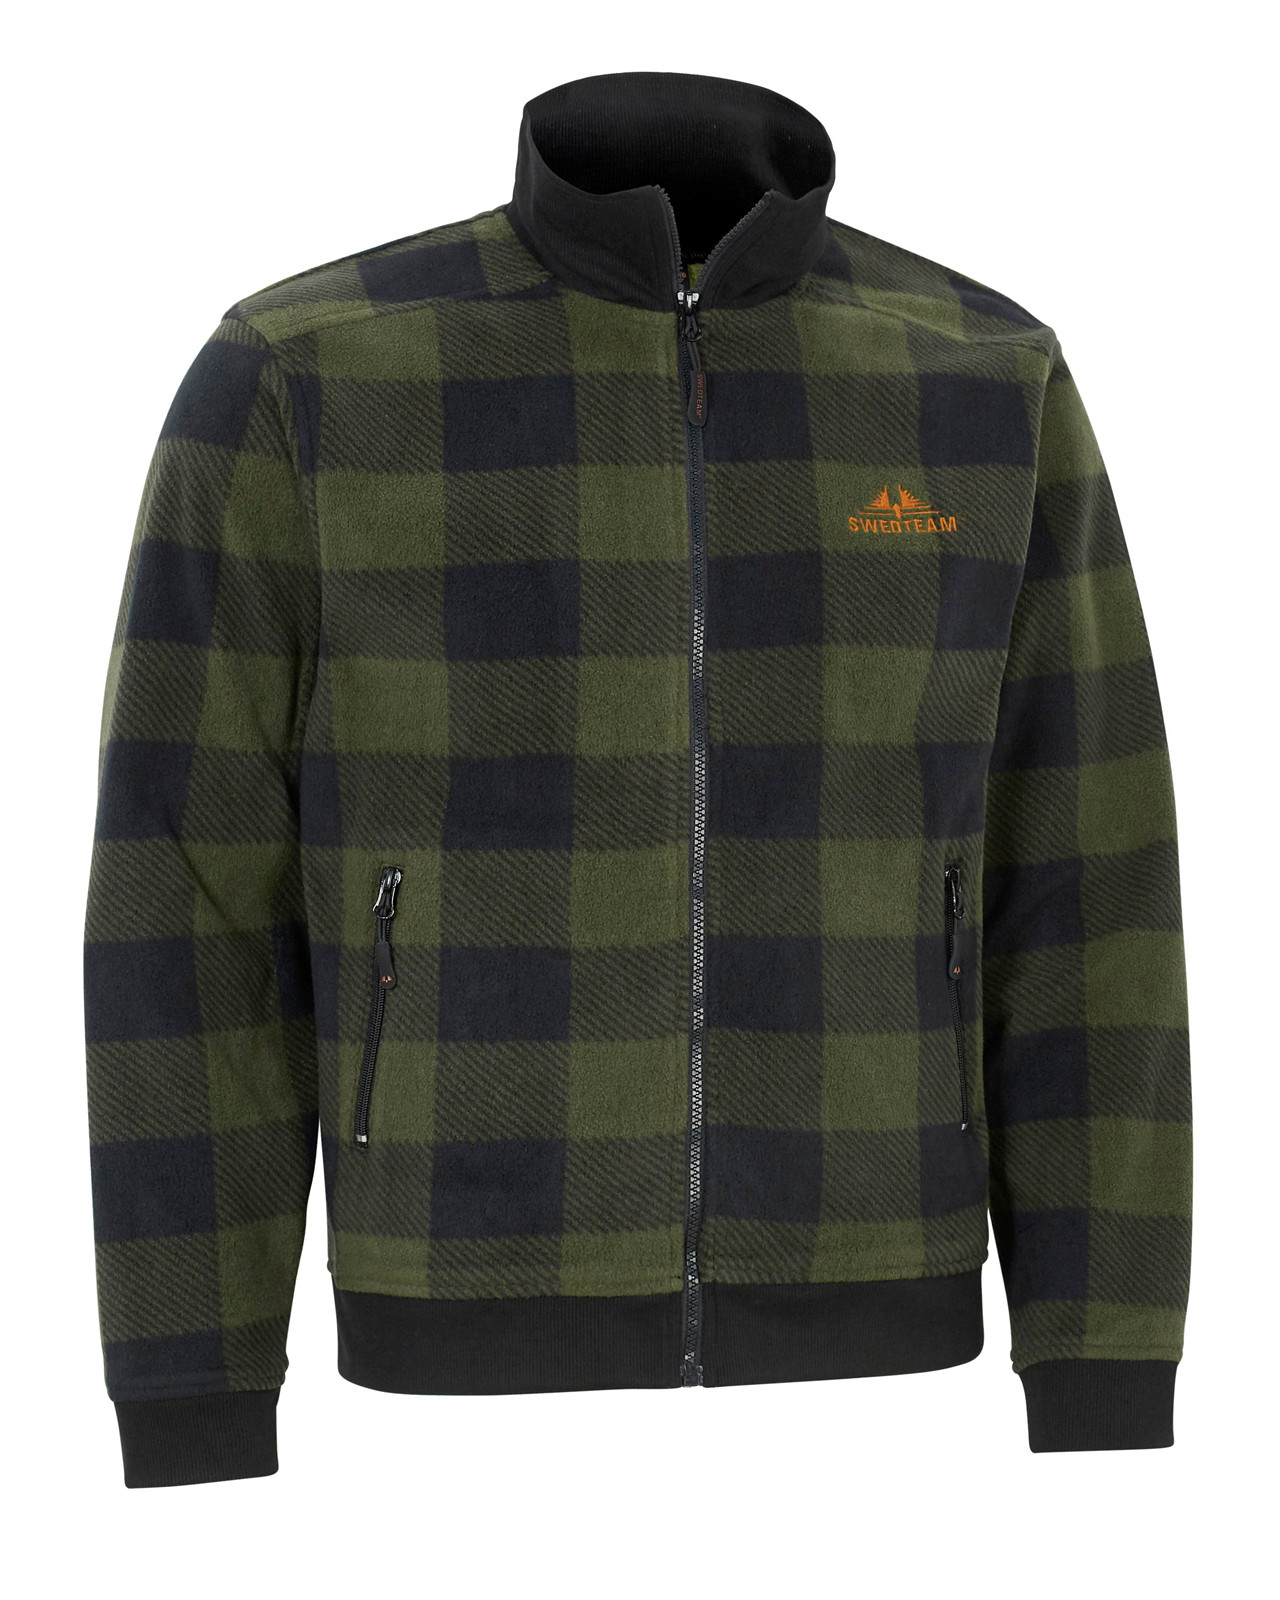 Se Swedteam Lynx sweater fullzip (Green, S) hos Specialbutikken